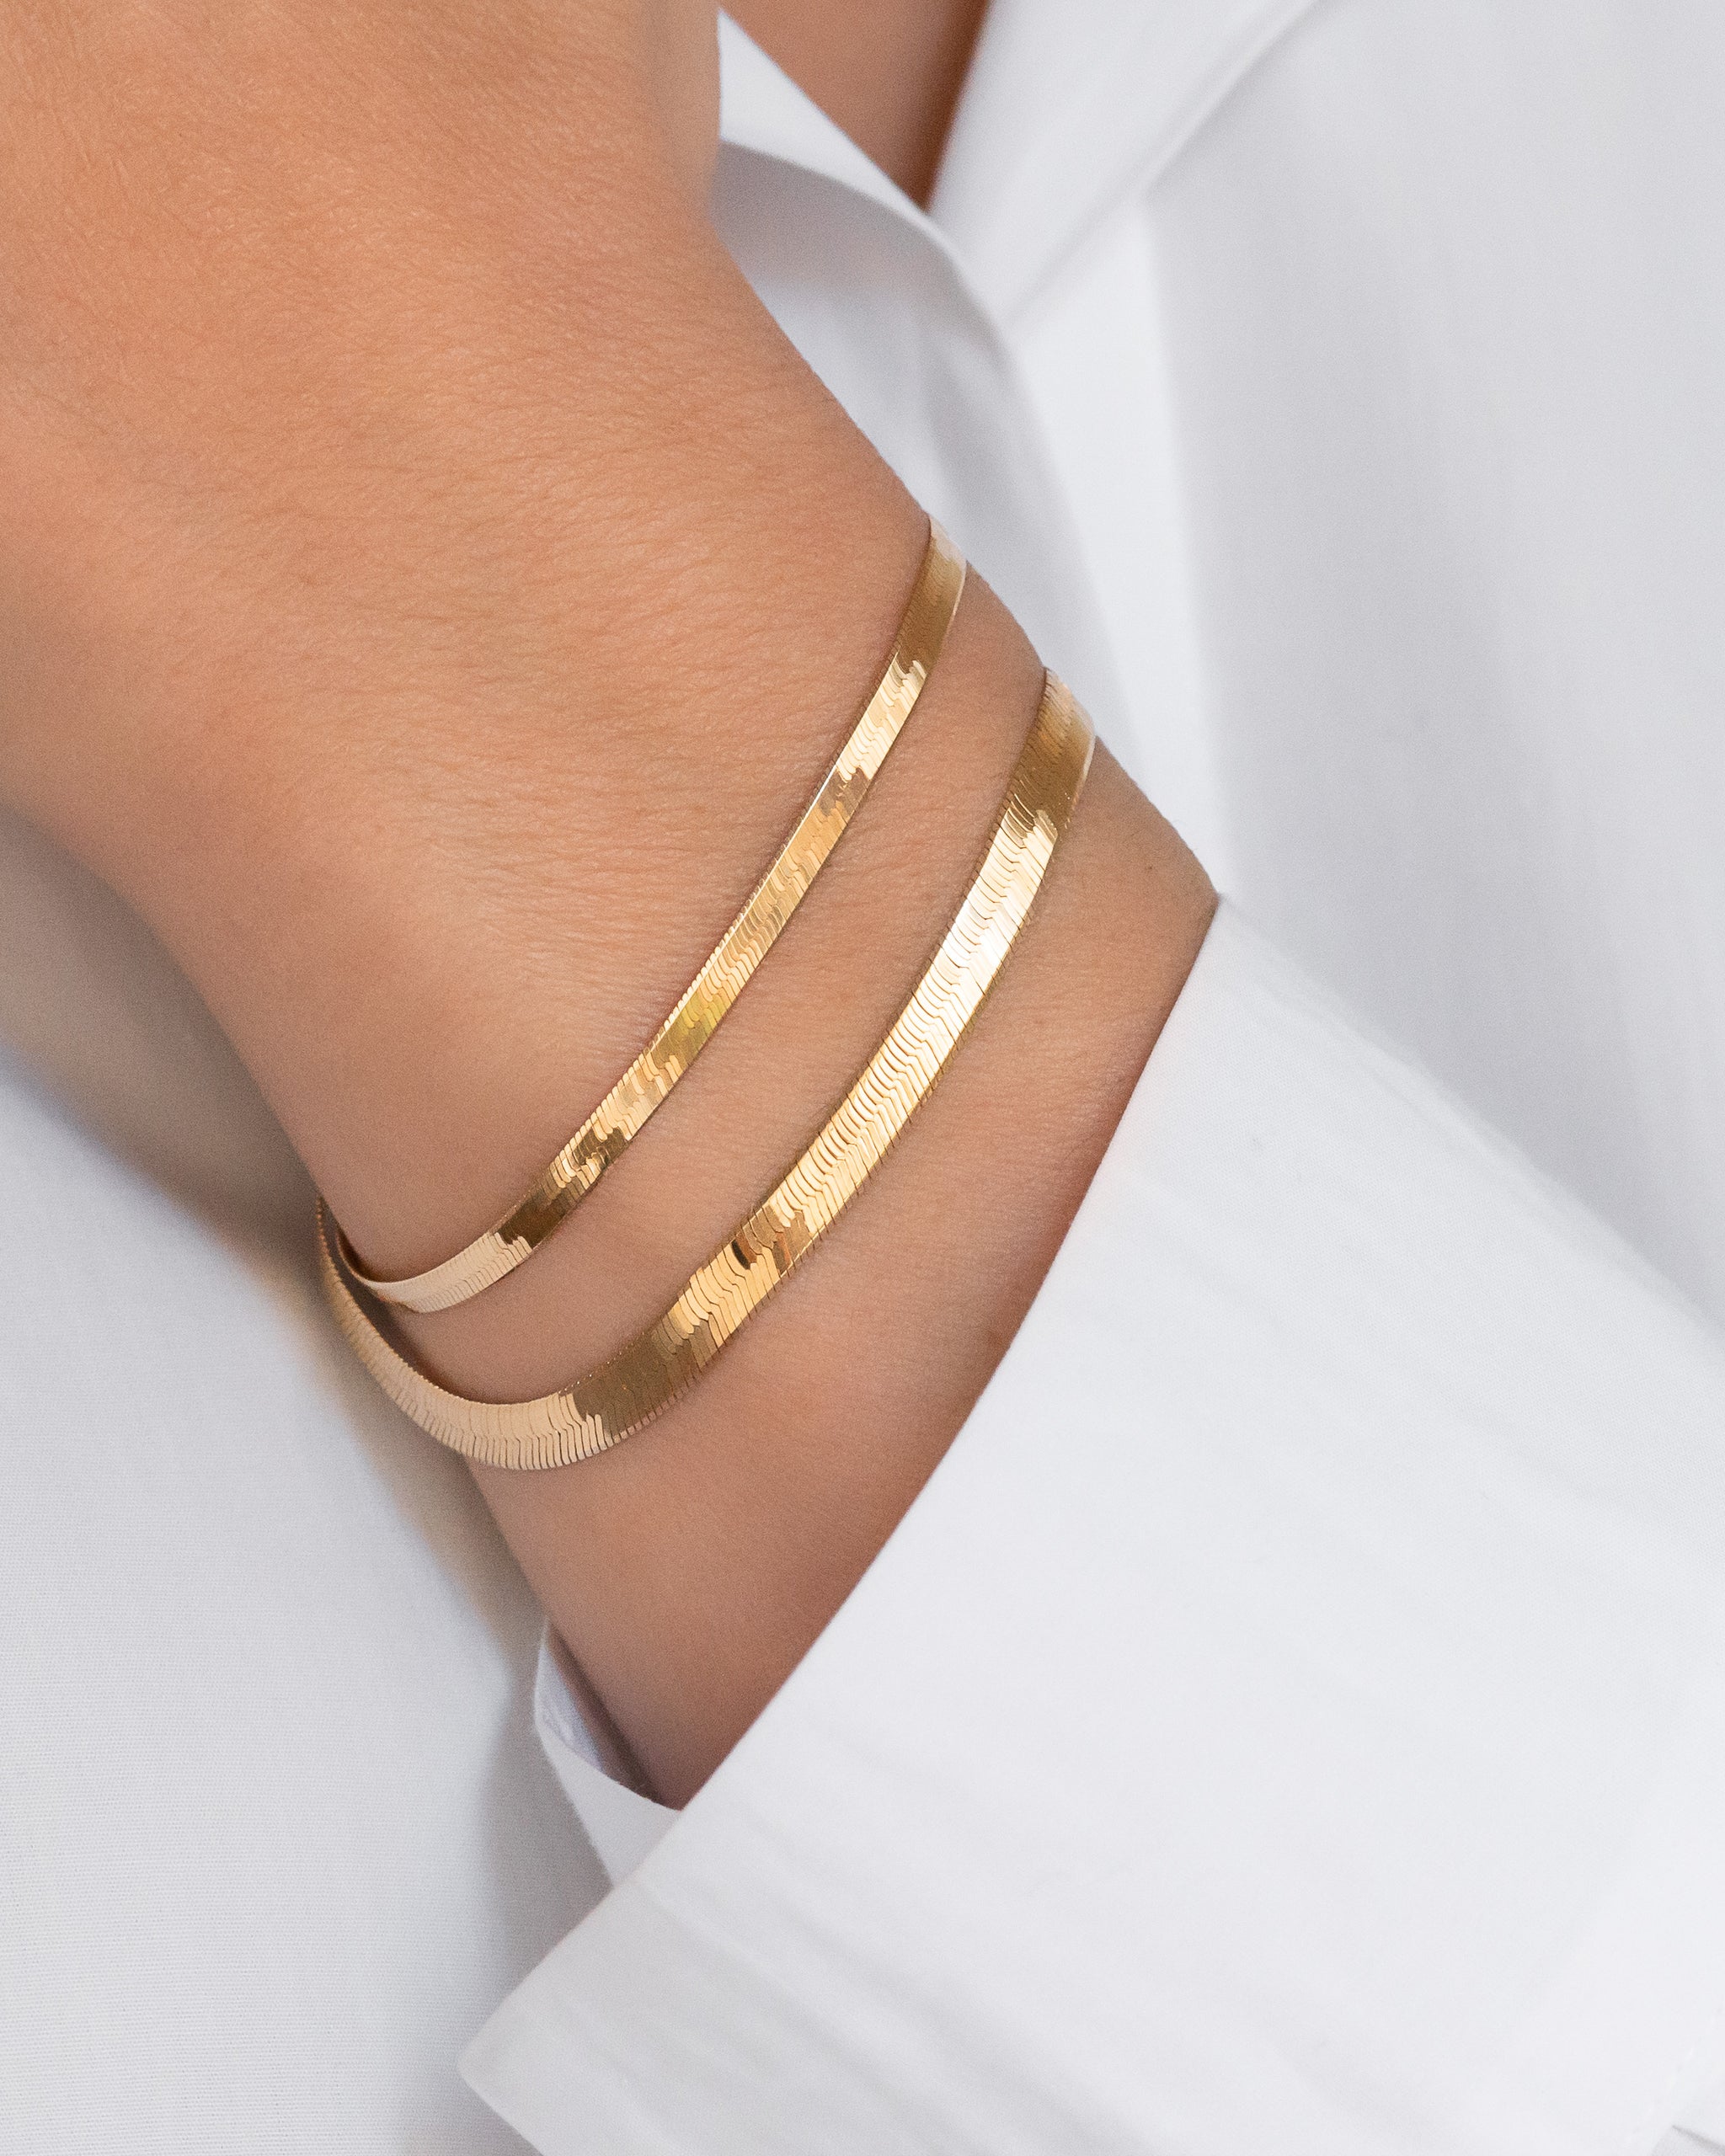 Large Herringbone Gold Bracelet